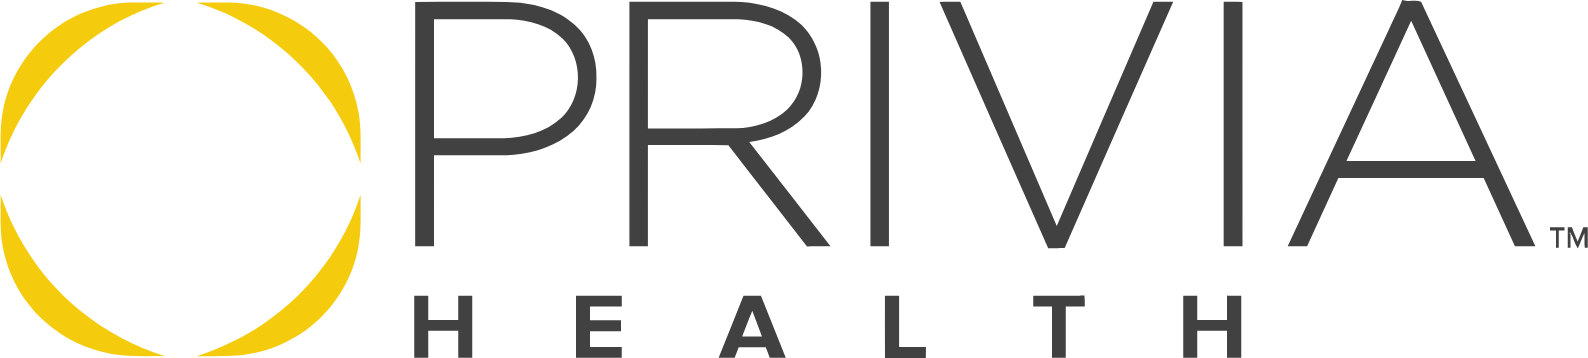 Privia Health Group logo large (transparent PNG)